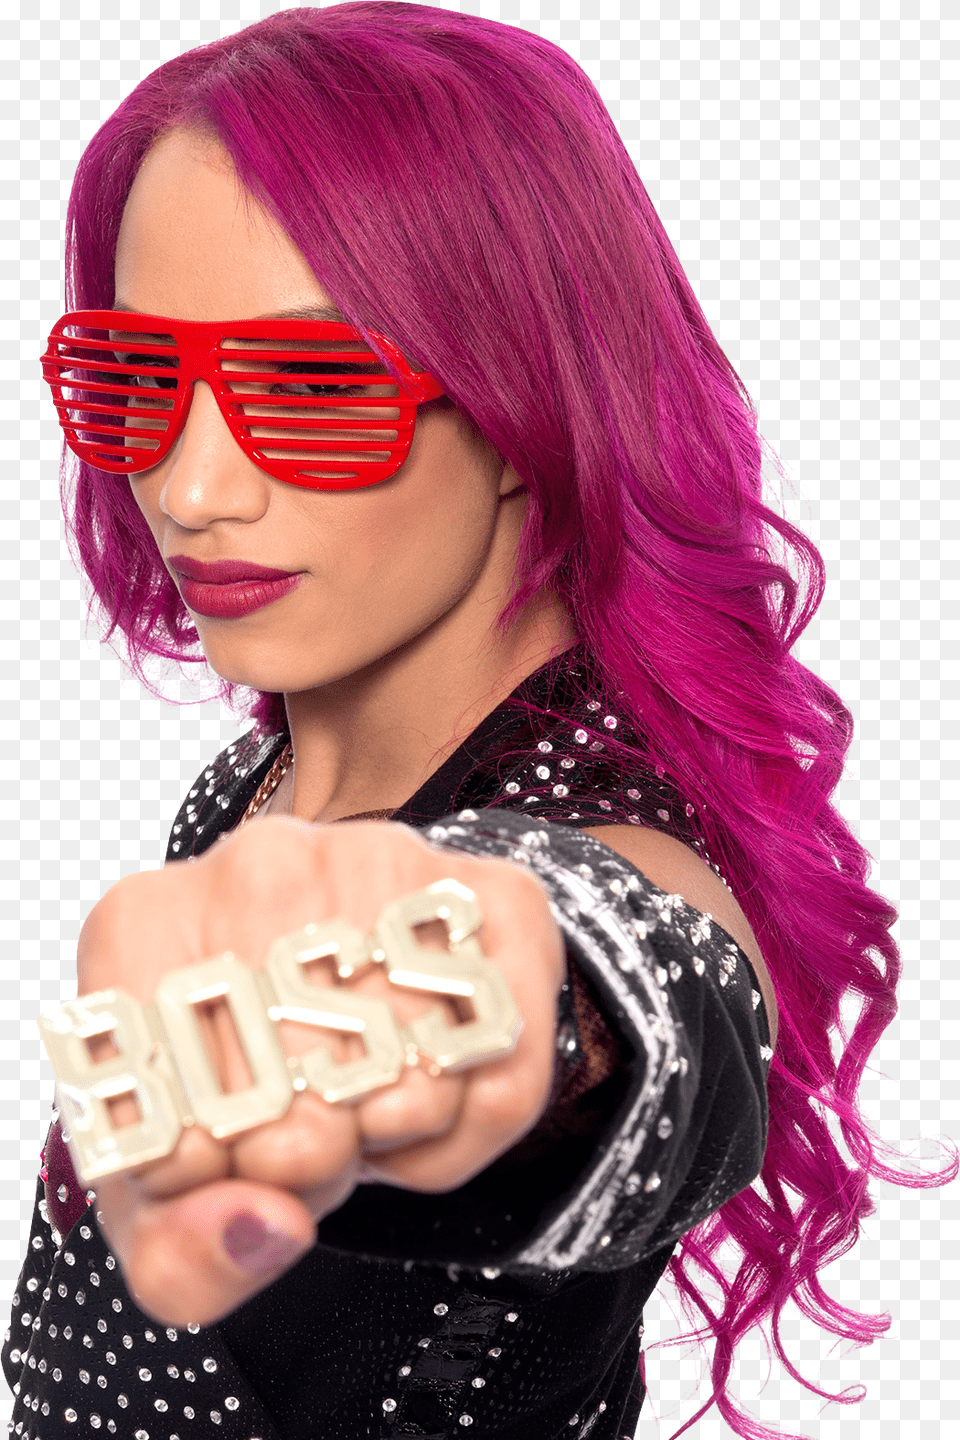 Sasha Banks With Glasses Download Sasha Bangs, Accessories, Sunglasses, Person, Hand Free Transparent Png